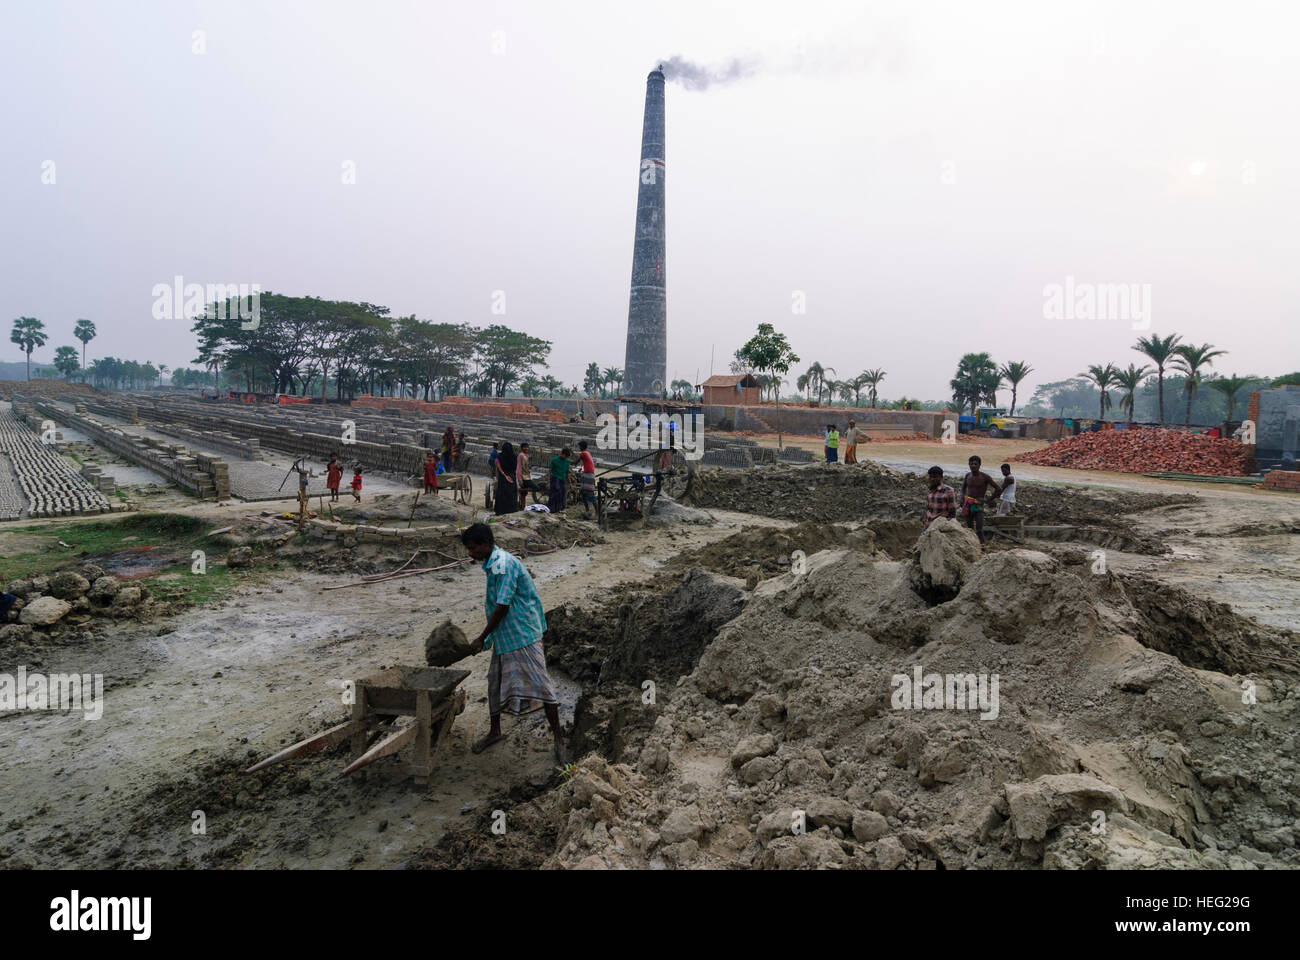 Noapra: Brickyard, bricks, Khulna Division, Bangladesh Stock Photo